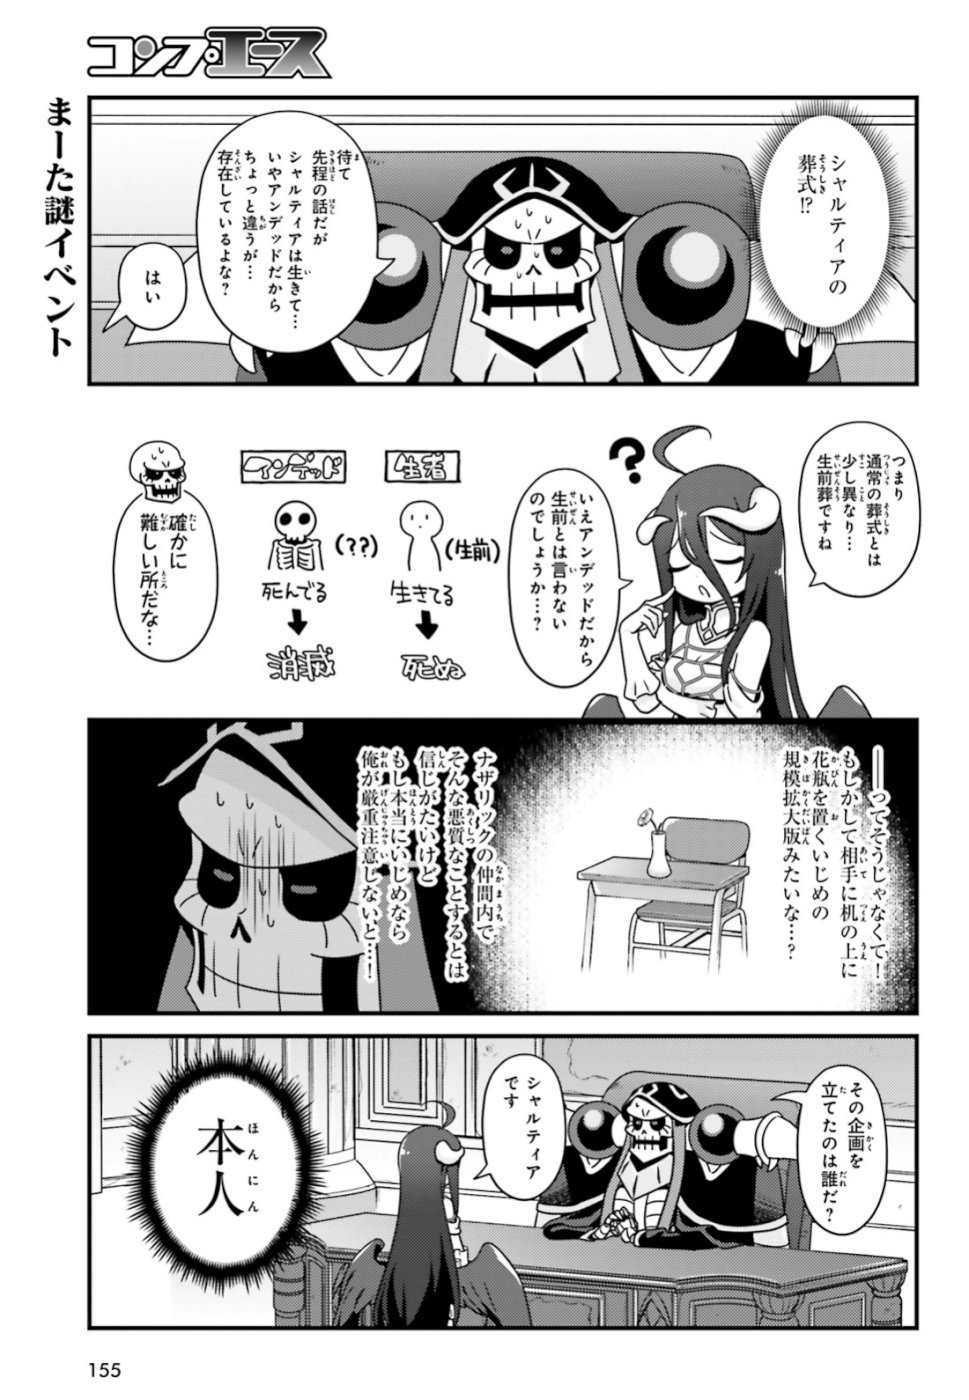 Overlord-Fushisha-no-Oh - Chapter 31 - Page 3